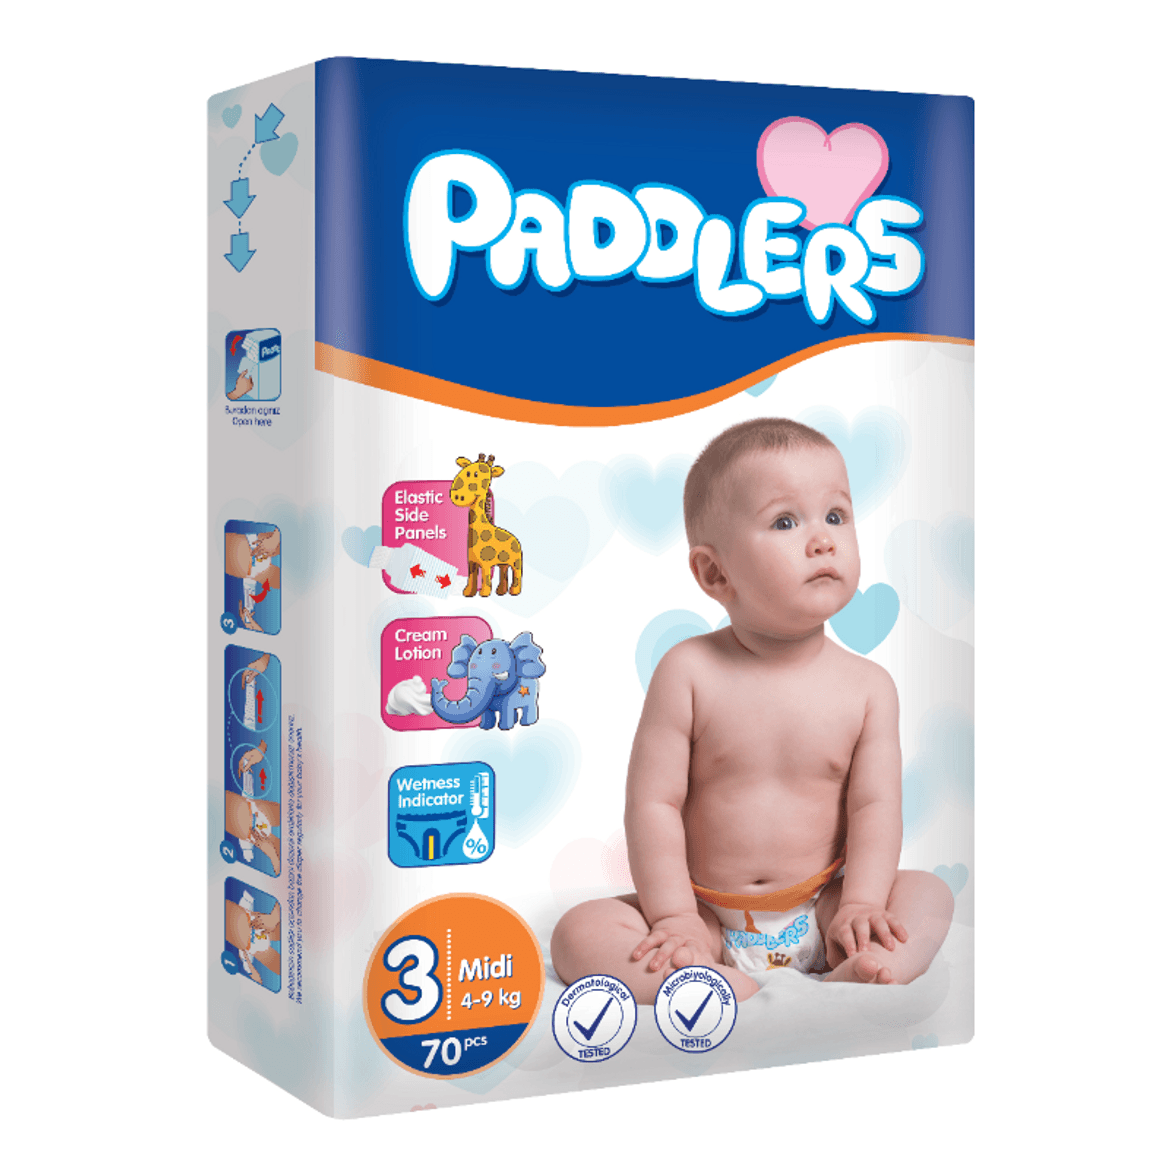 Paddlers Baby nadrágpelenka S3 4-9 kg midi